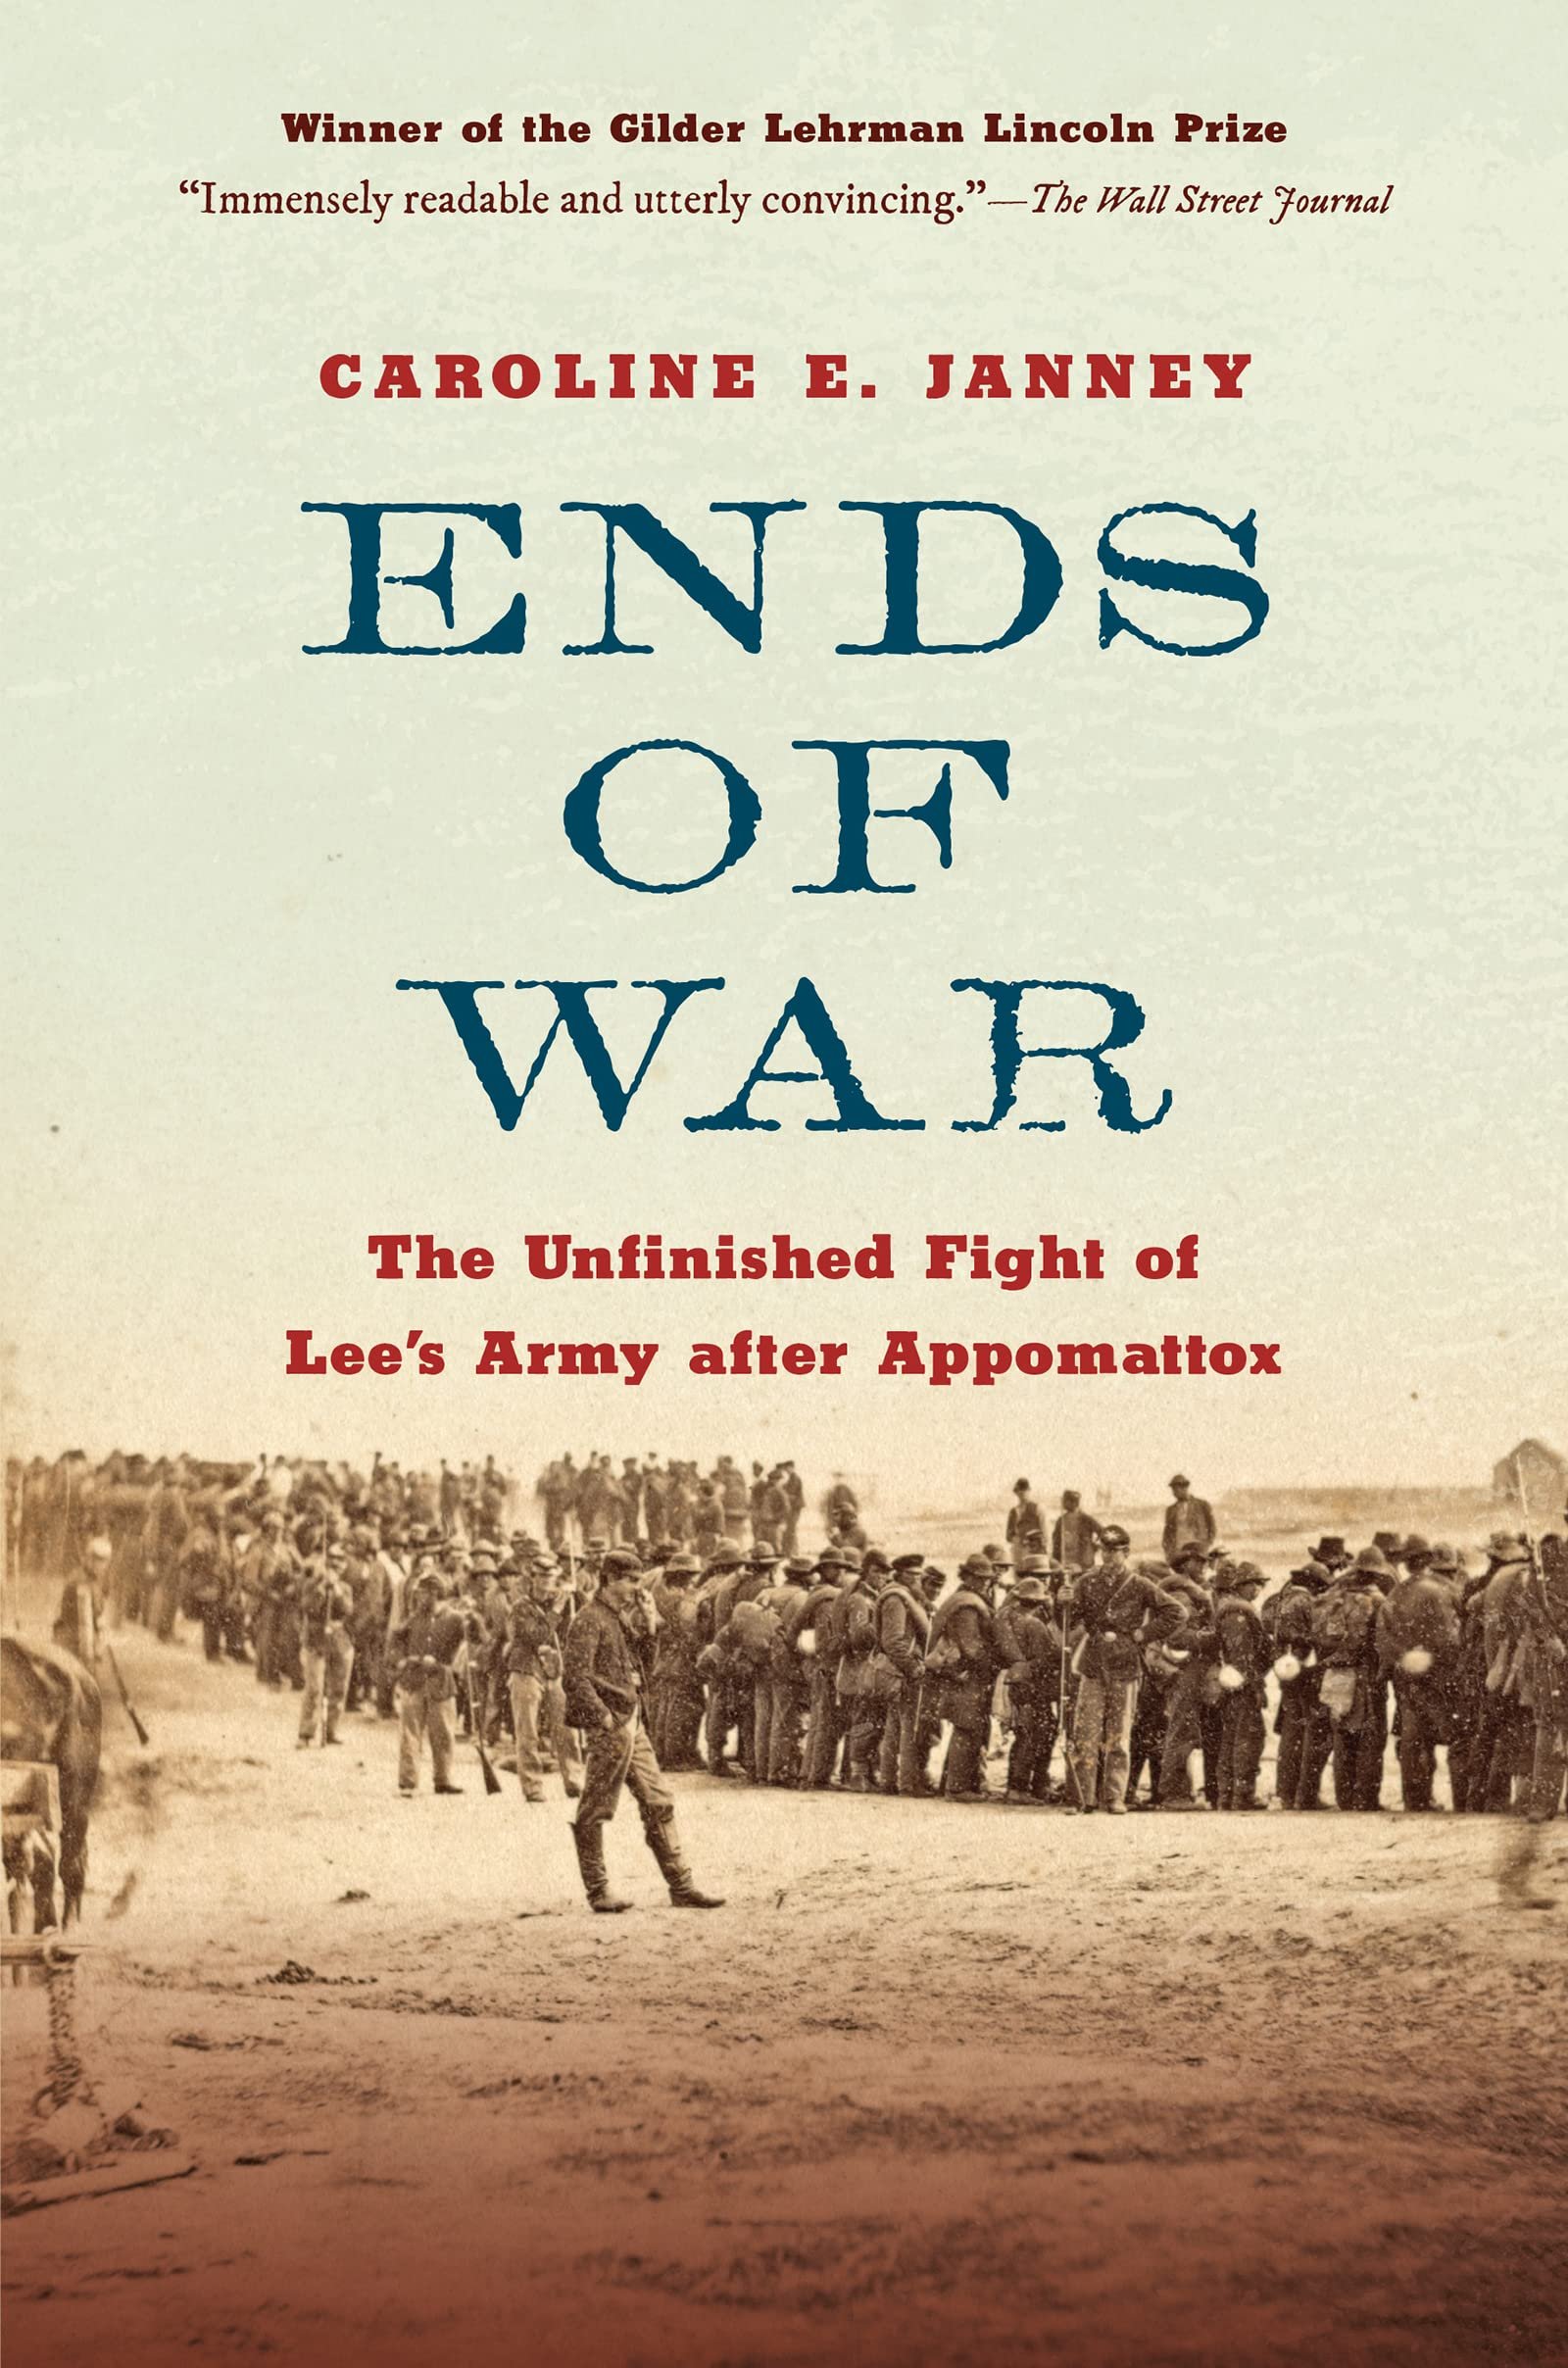 Southwestern Historical Quarterly - Ends of War (Caroline E. Janney)